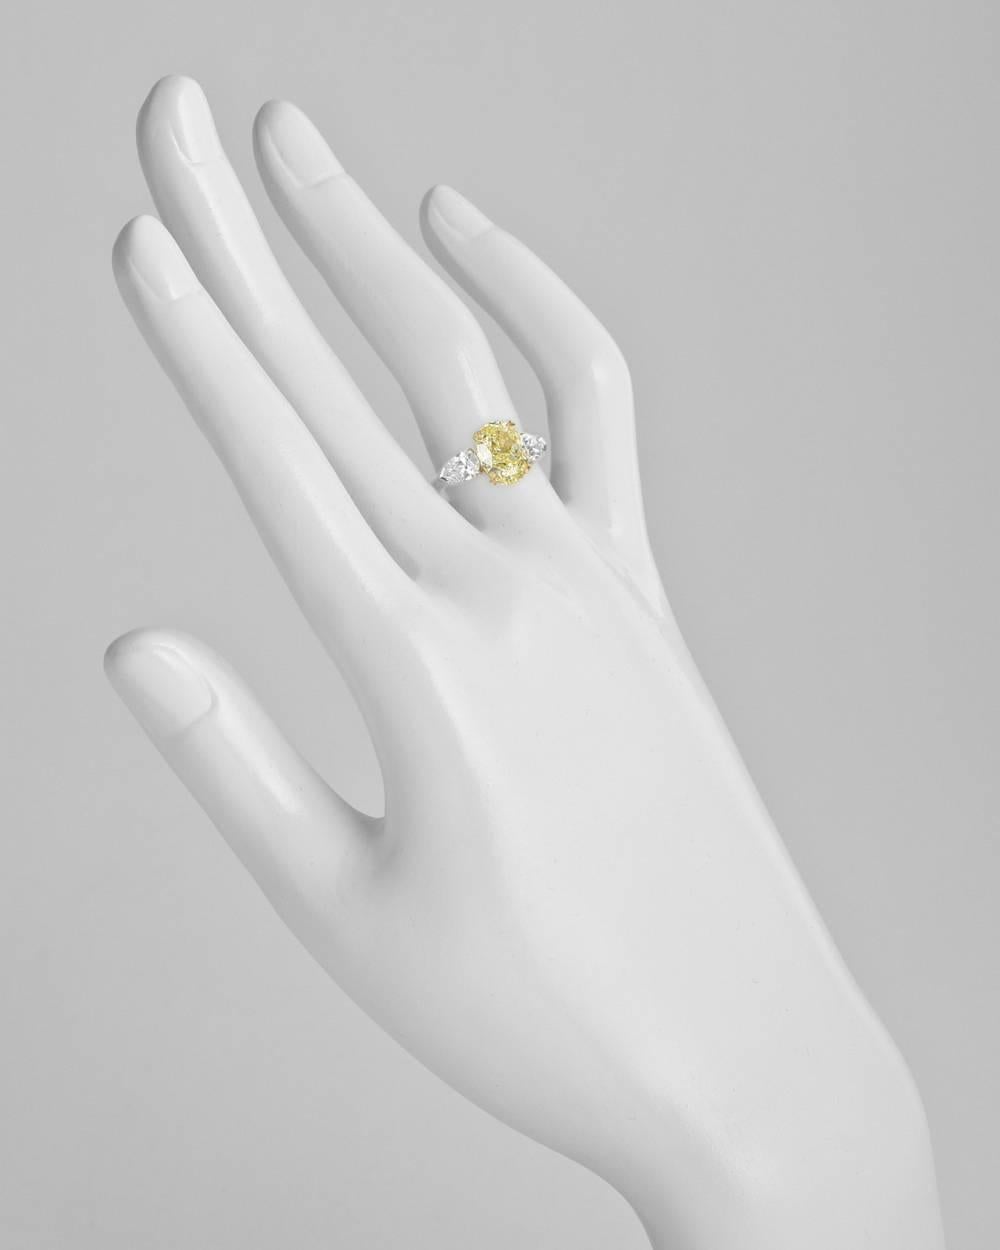 Women's or Men's Betteridge 3.26 Carat Fancy Yellow Diamond Ring